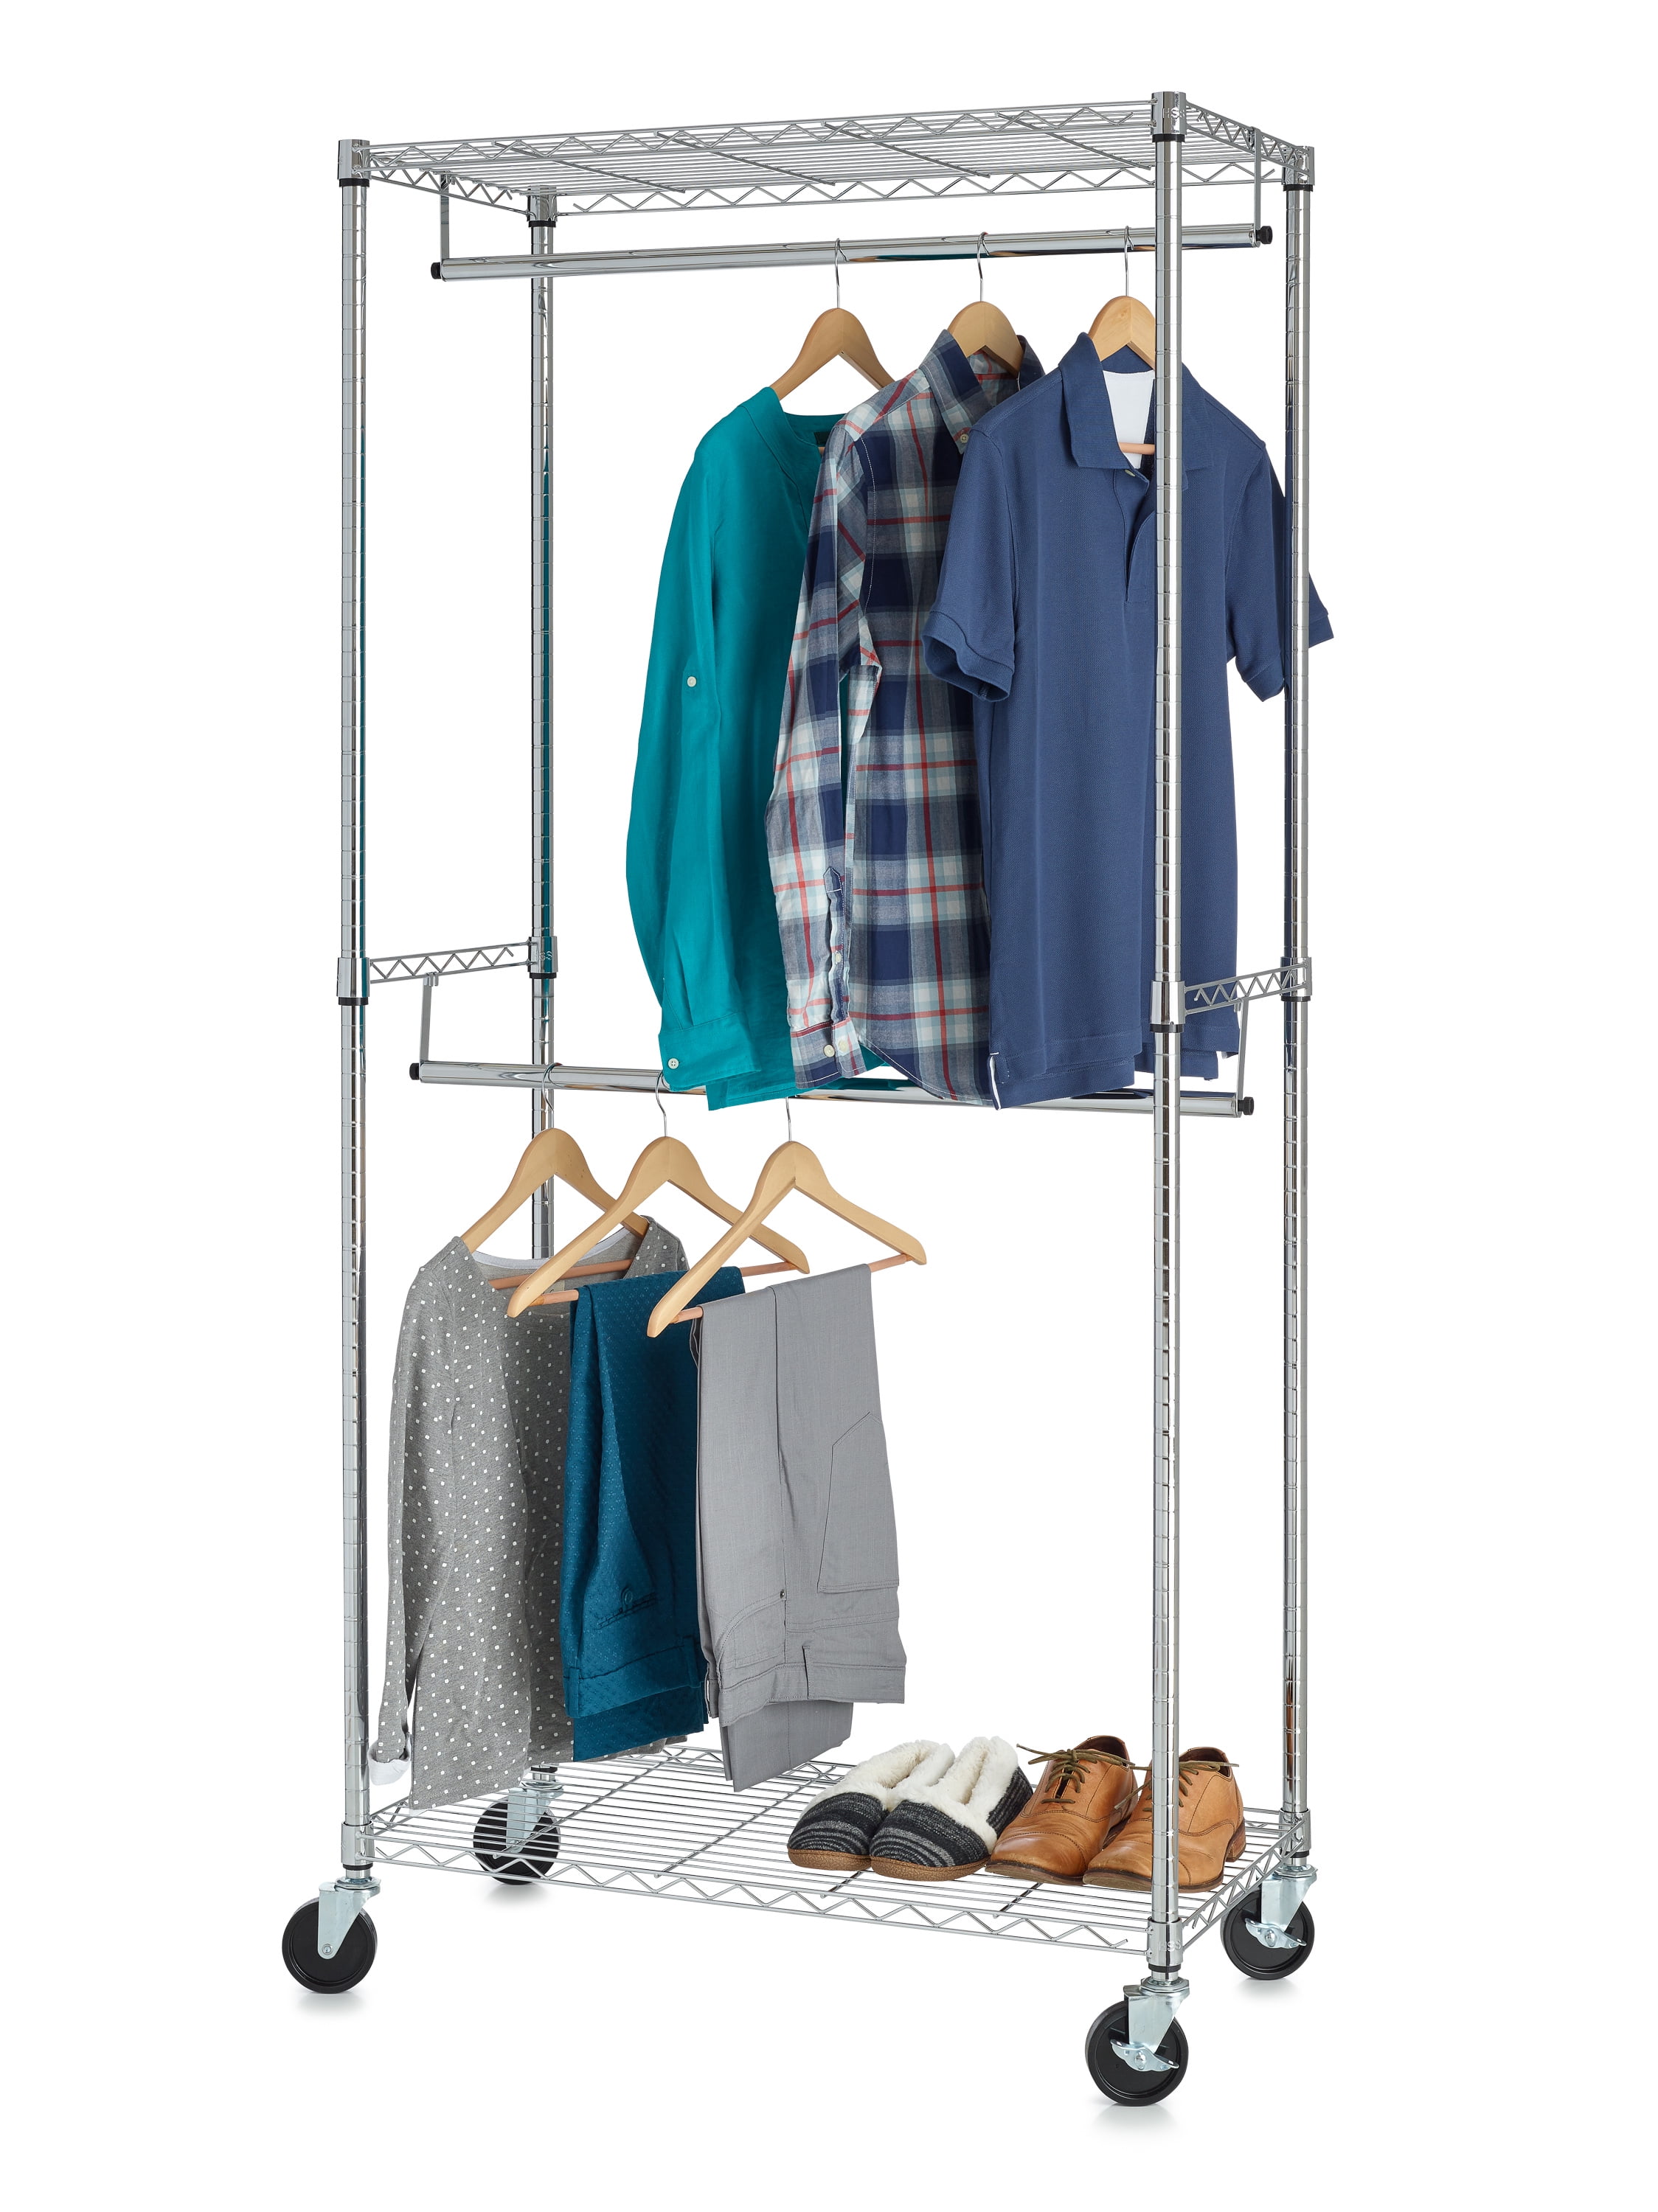 Details about   Laundry Clothes Rack w Adjustable Shelves Rolling Caster Durable Steel Chrome